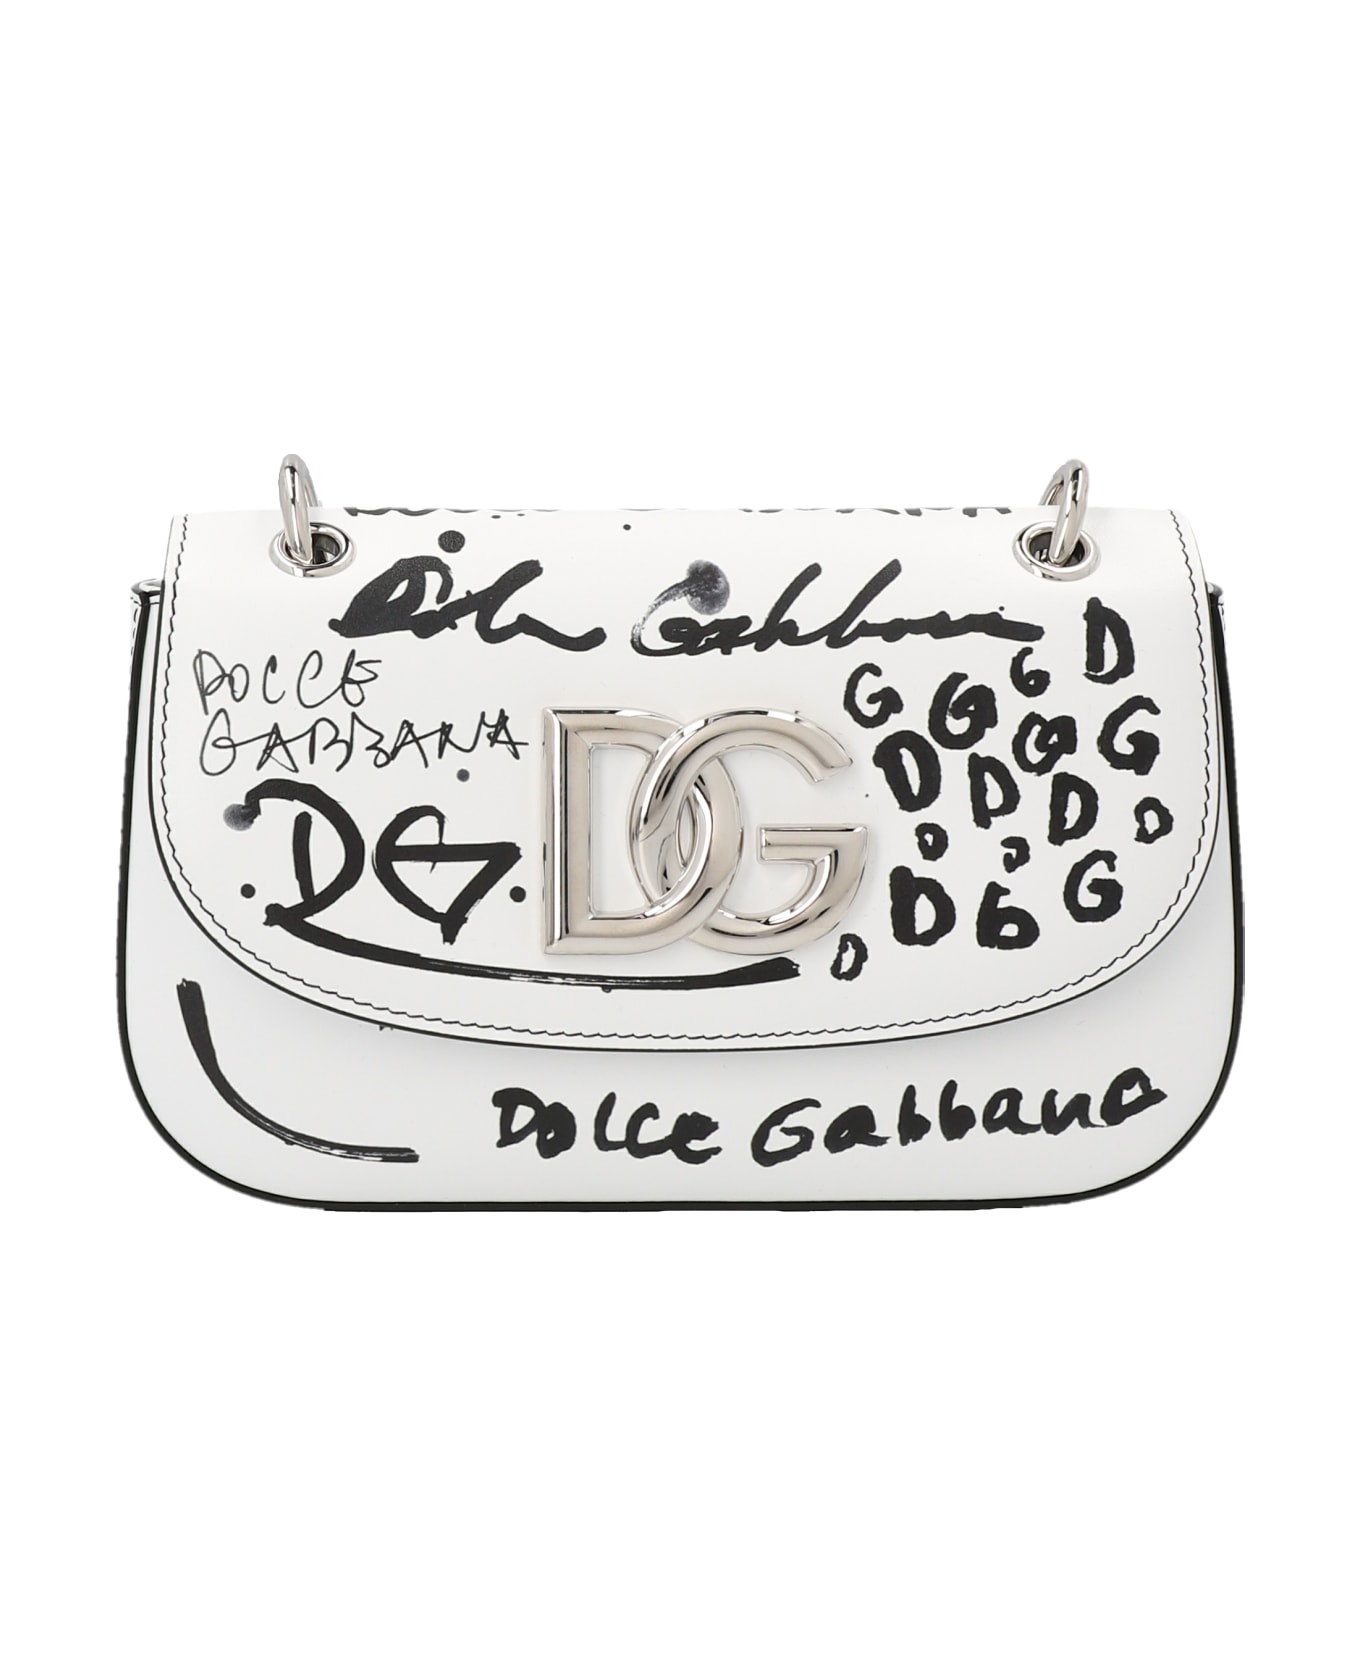 Dolce & Gabbana Logo Crossbody Bag - White/Black